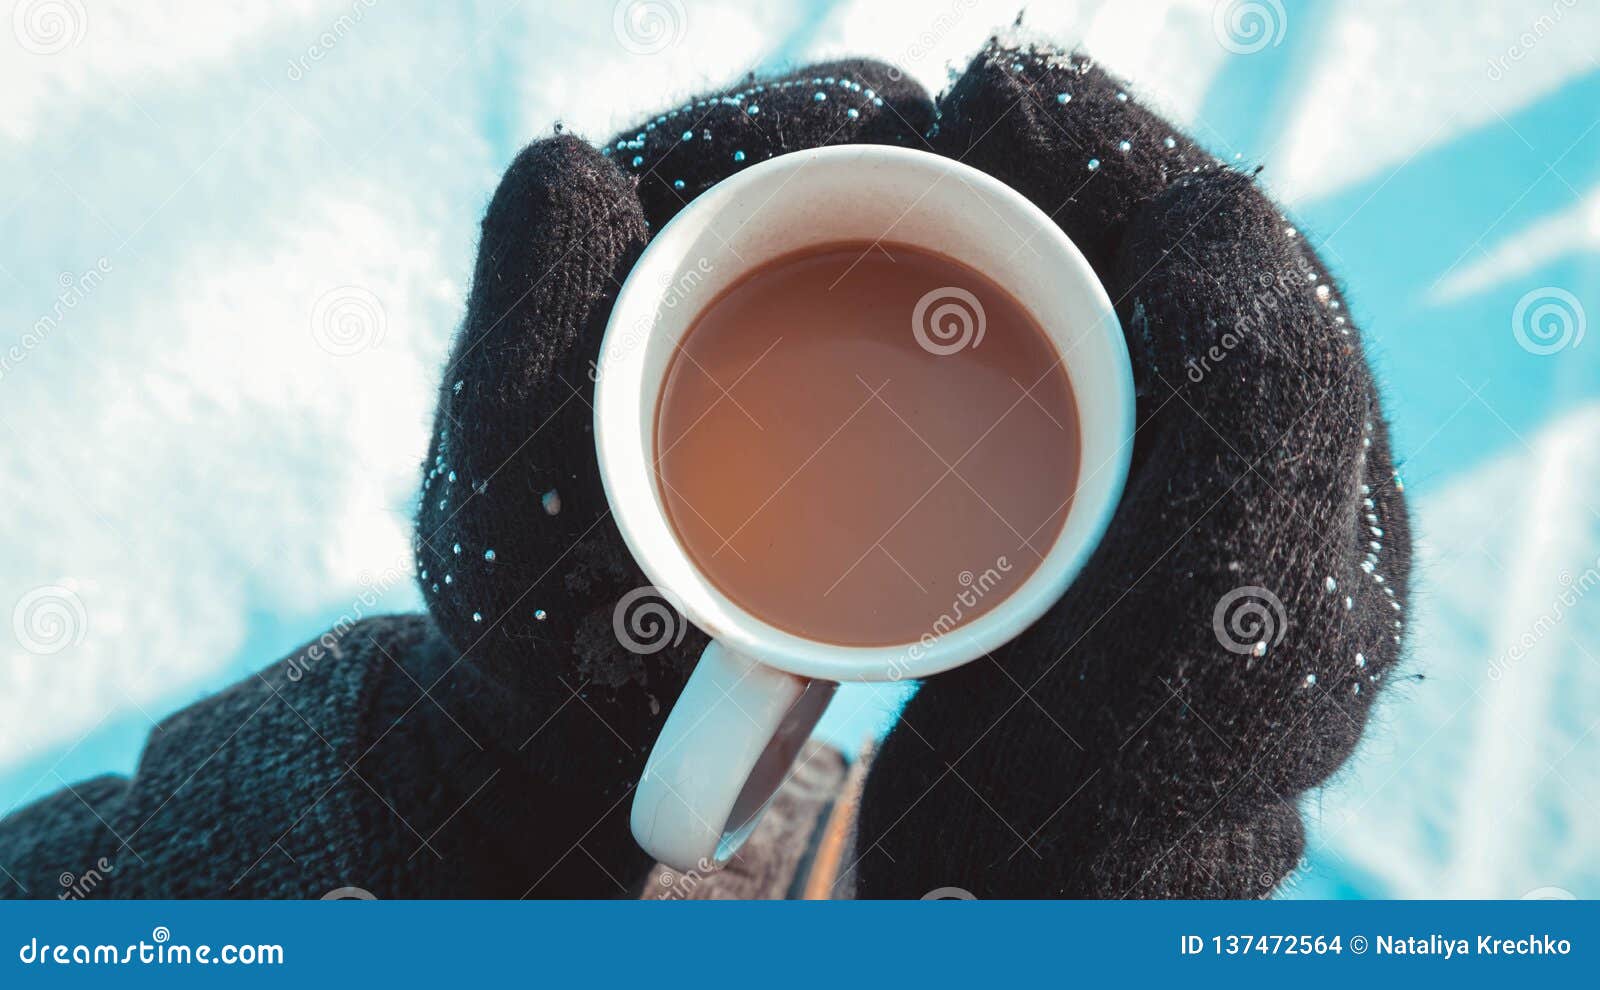 https://thumbs.dreamstime.com/z/warm-cup-hot-coffee-warming-hands-girl-warm-cup-hot-coffee-warming-hands-mittens-womens-hands-137472564.jpg